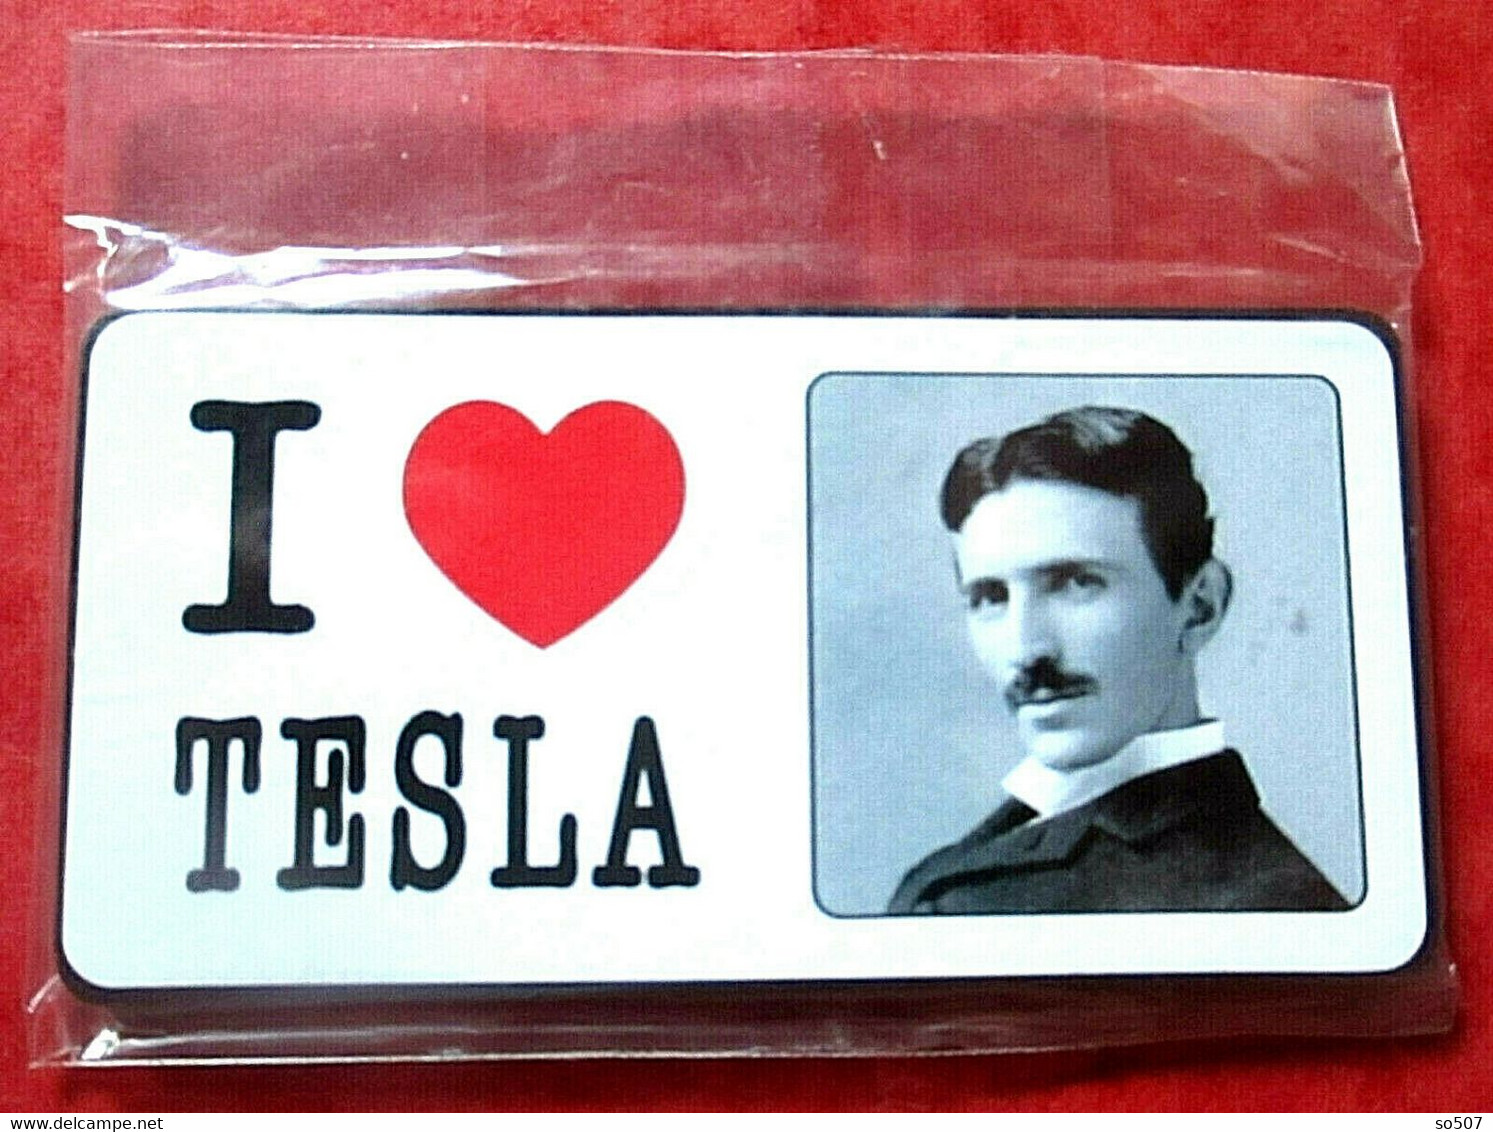 Magnet - I Love Tesla Magnet - NIKOLA TESLA Great Scientist,Visionaries,Inventor,Electrical Engineer,Mechanical Engineer - Personen